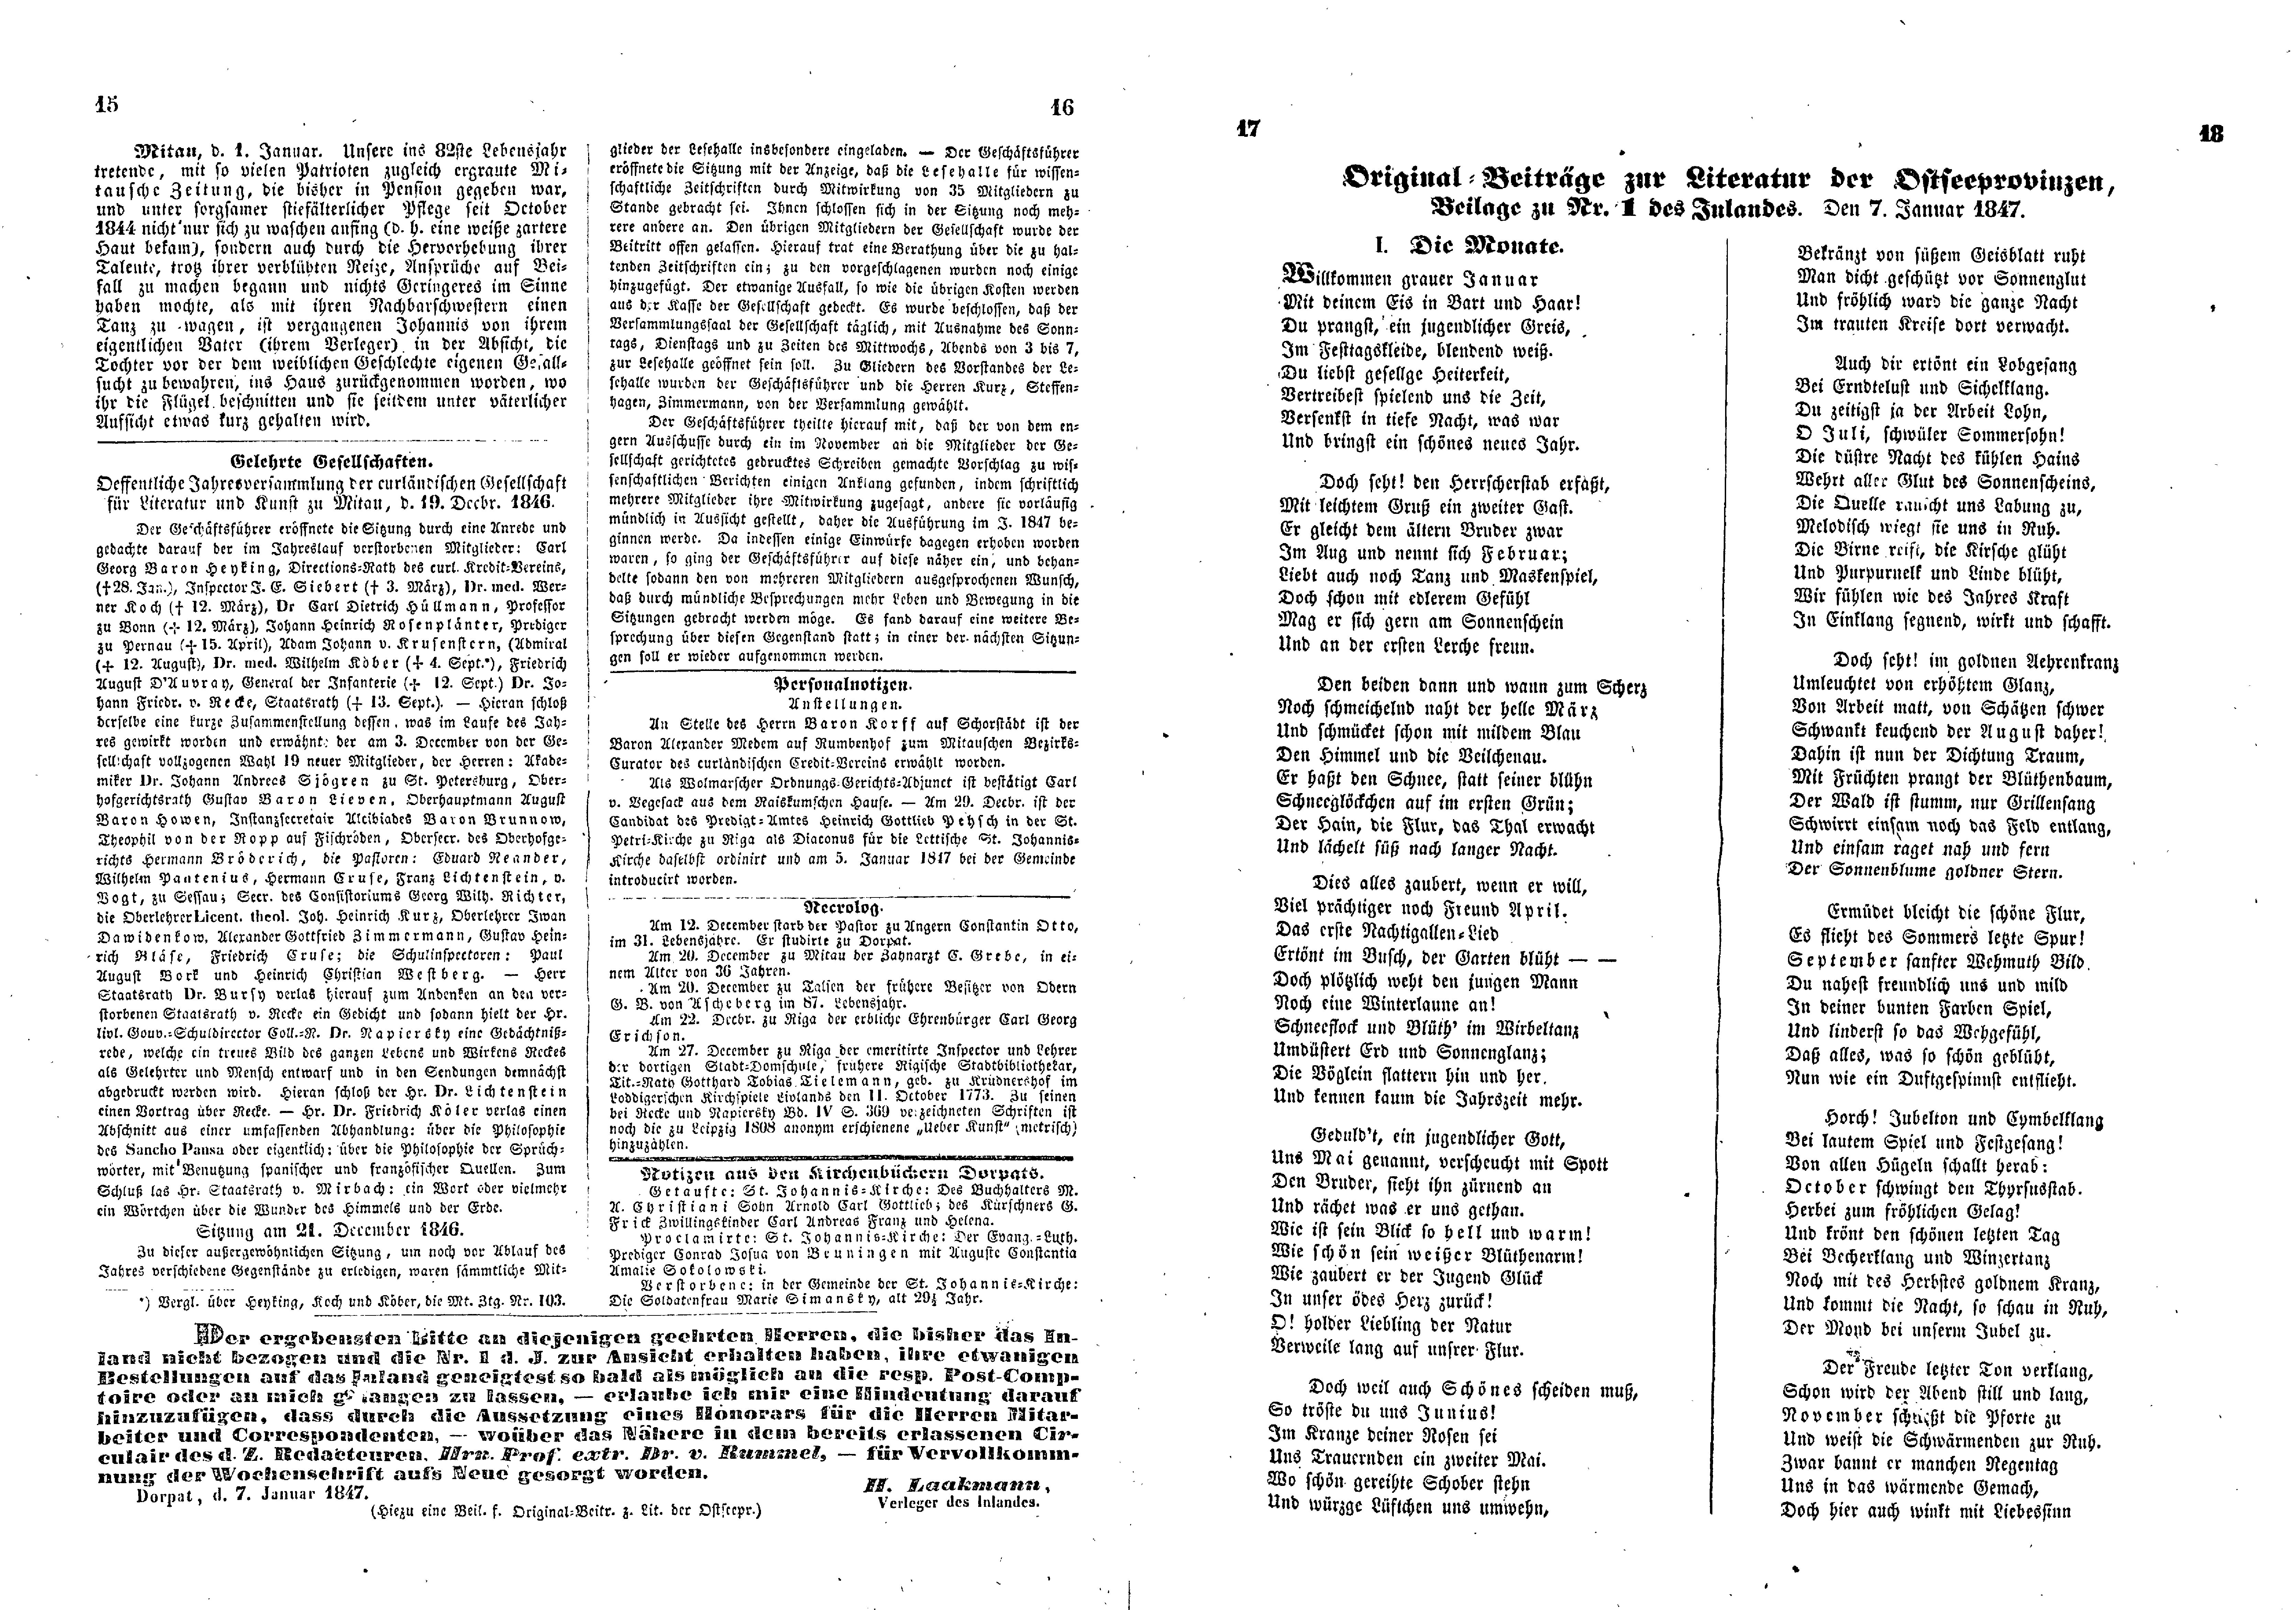 Das Inland [12] (1847) | 9. (15-18) Main body of text